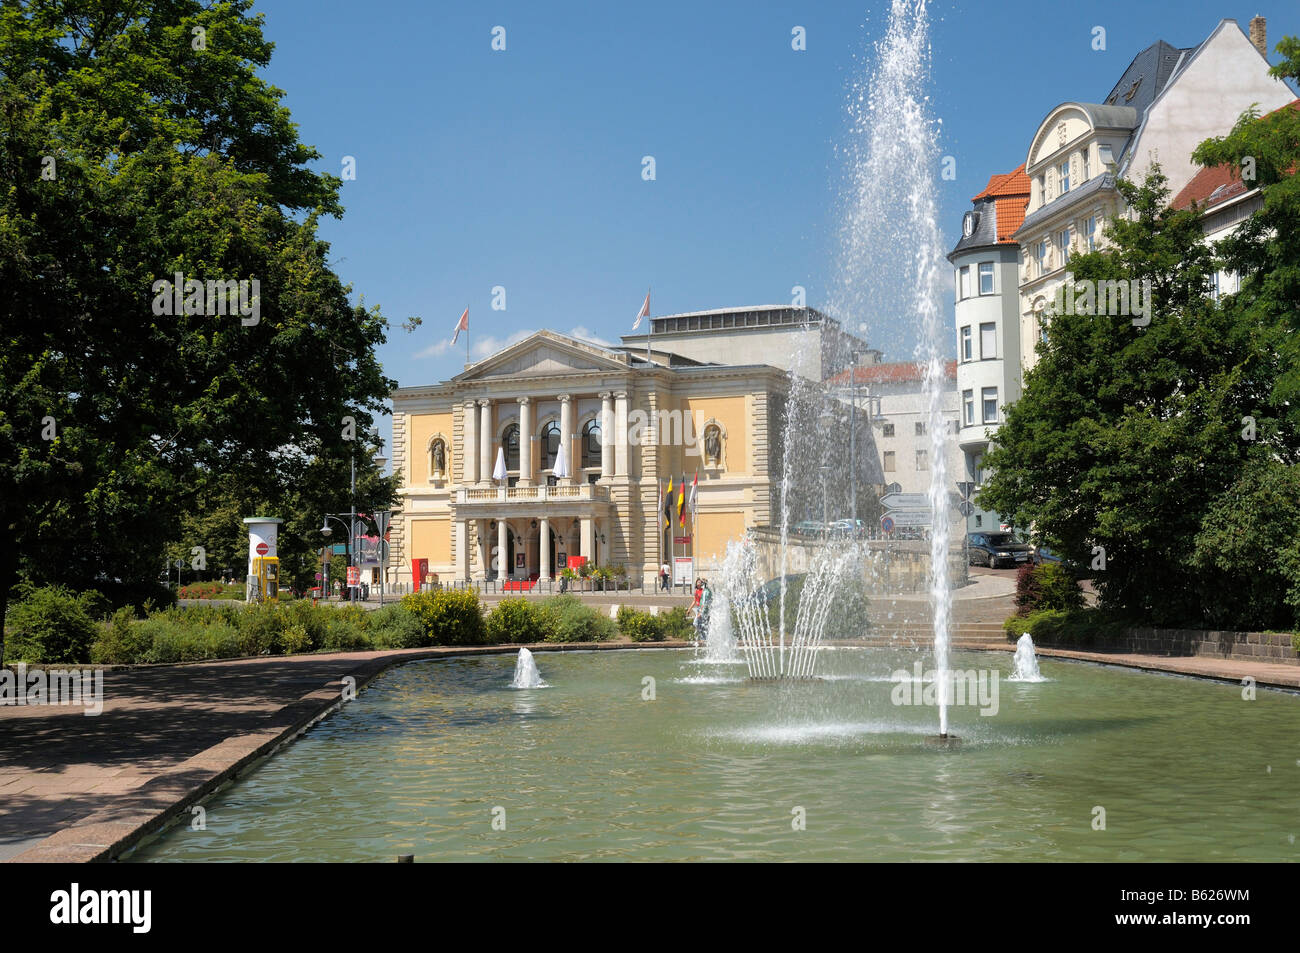 Fontaine en face de l'opéra, Universitaetsring, Halle/Saale, Saxe-Anhalt, Allemagne, Europe Banque D'Images